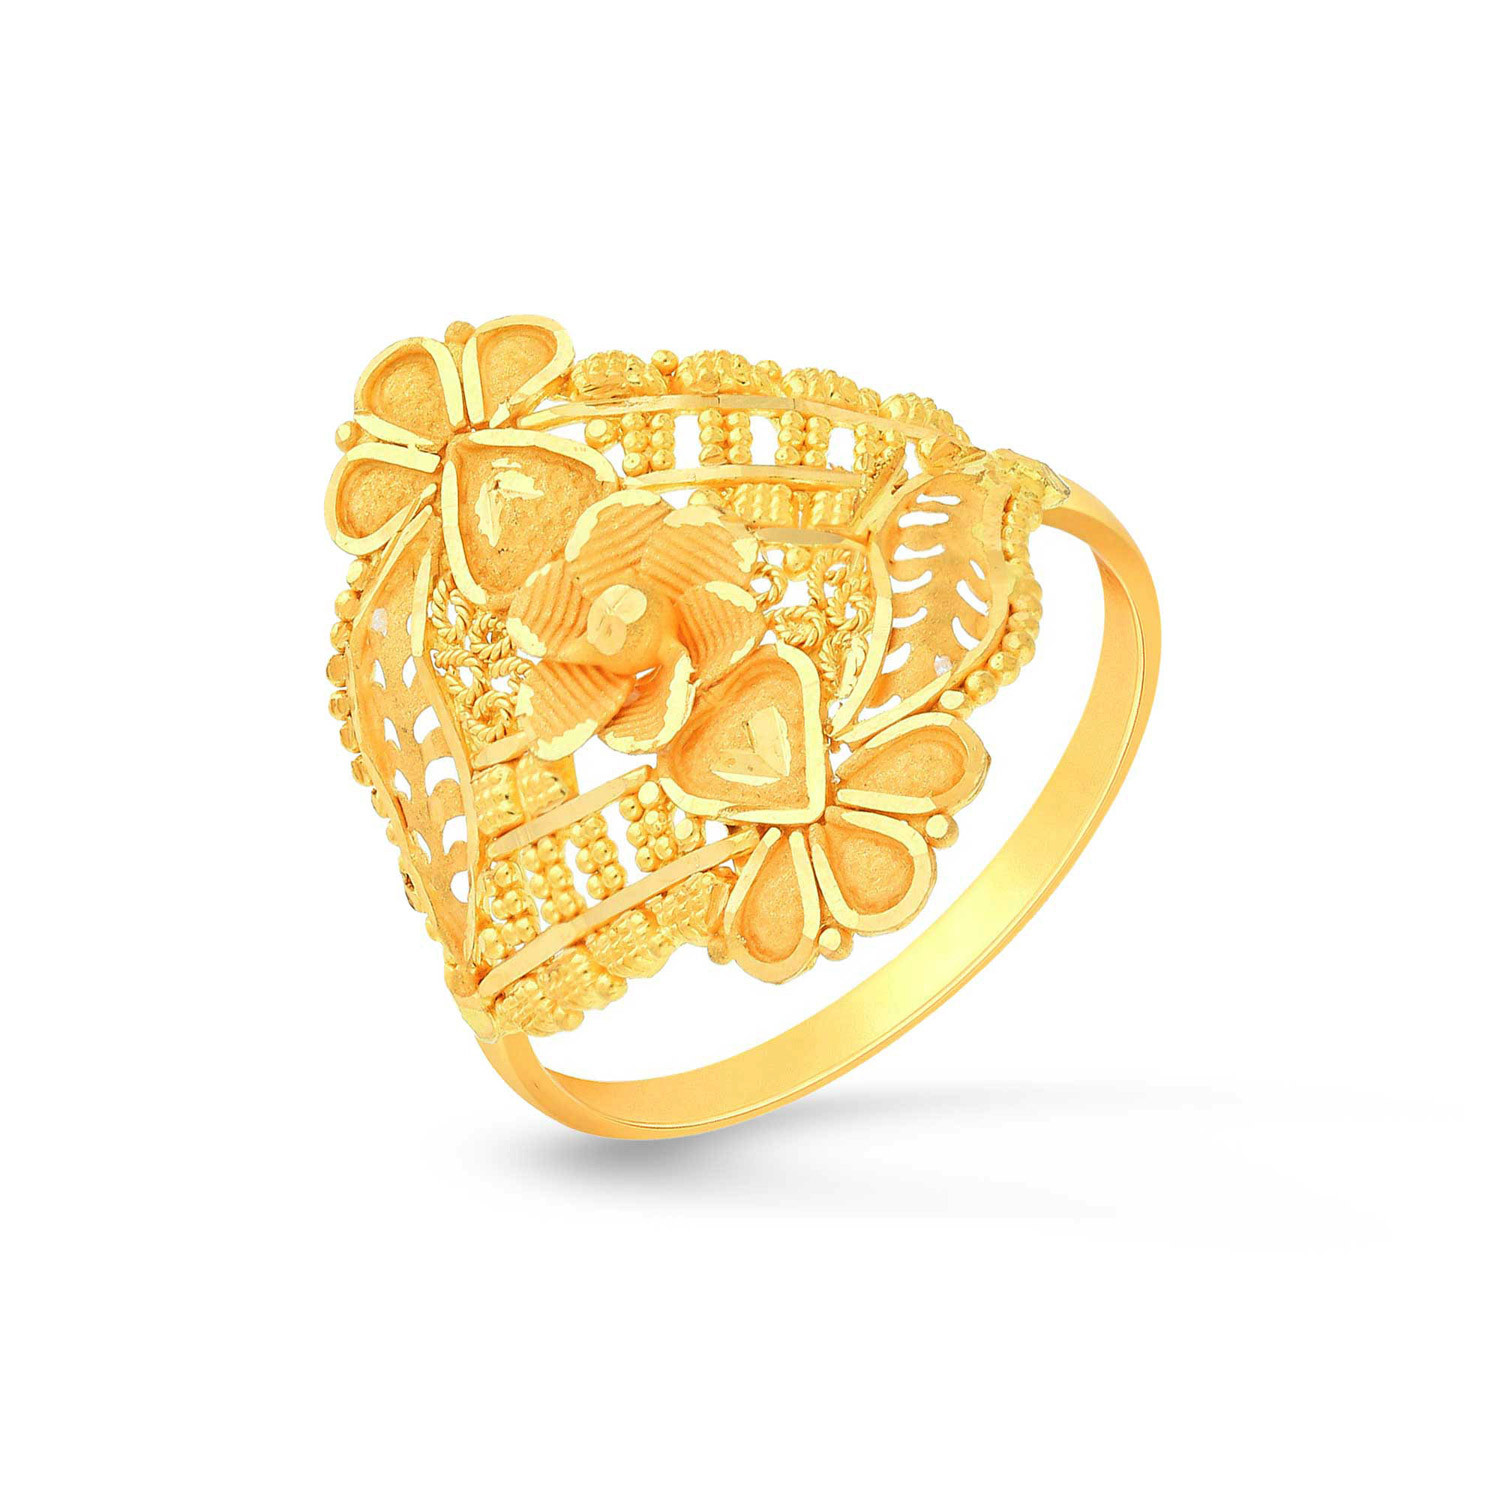 Malabar Gold Ring | Gold rings, Engagement rings, Rings